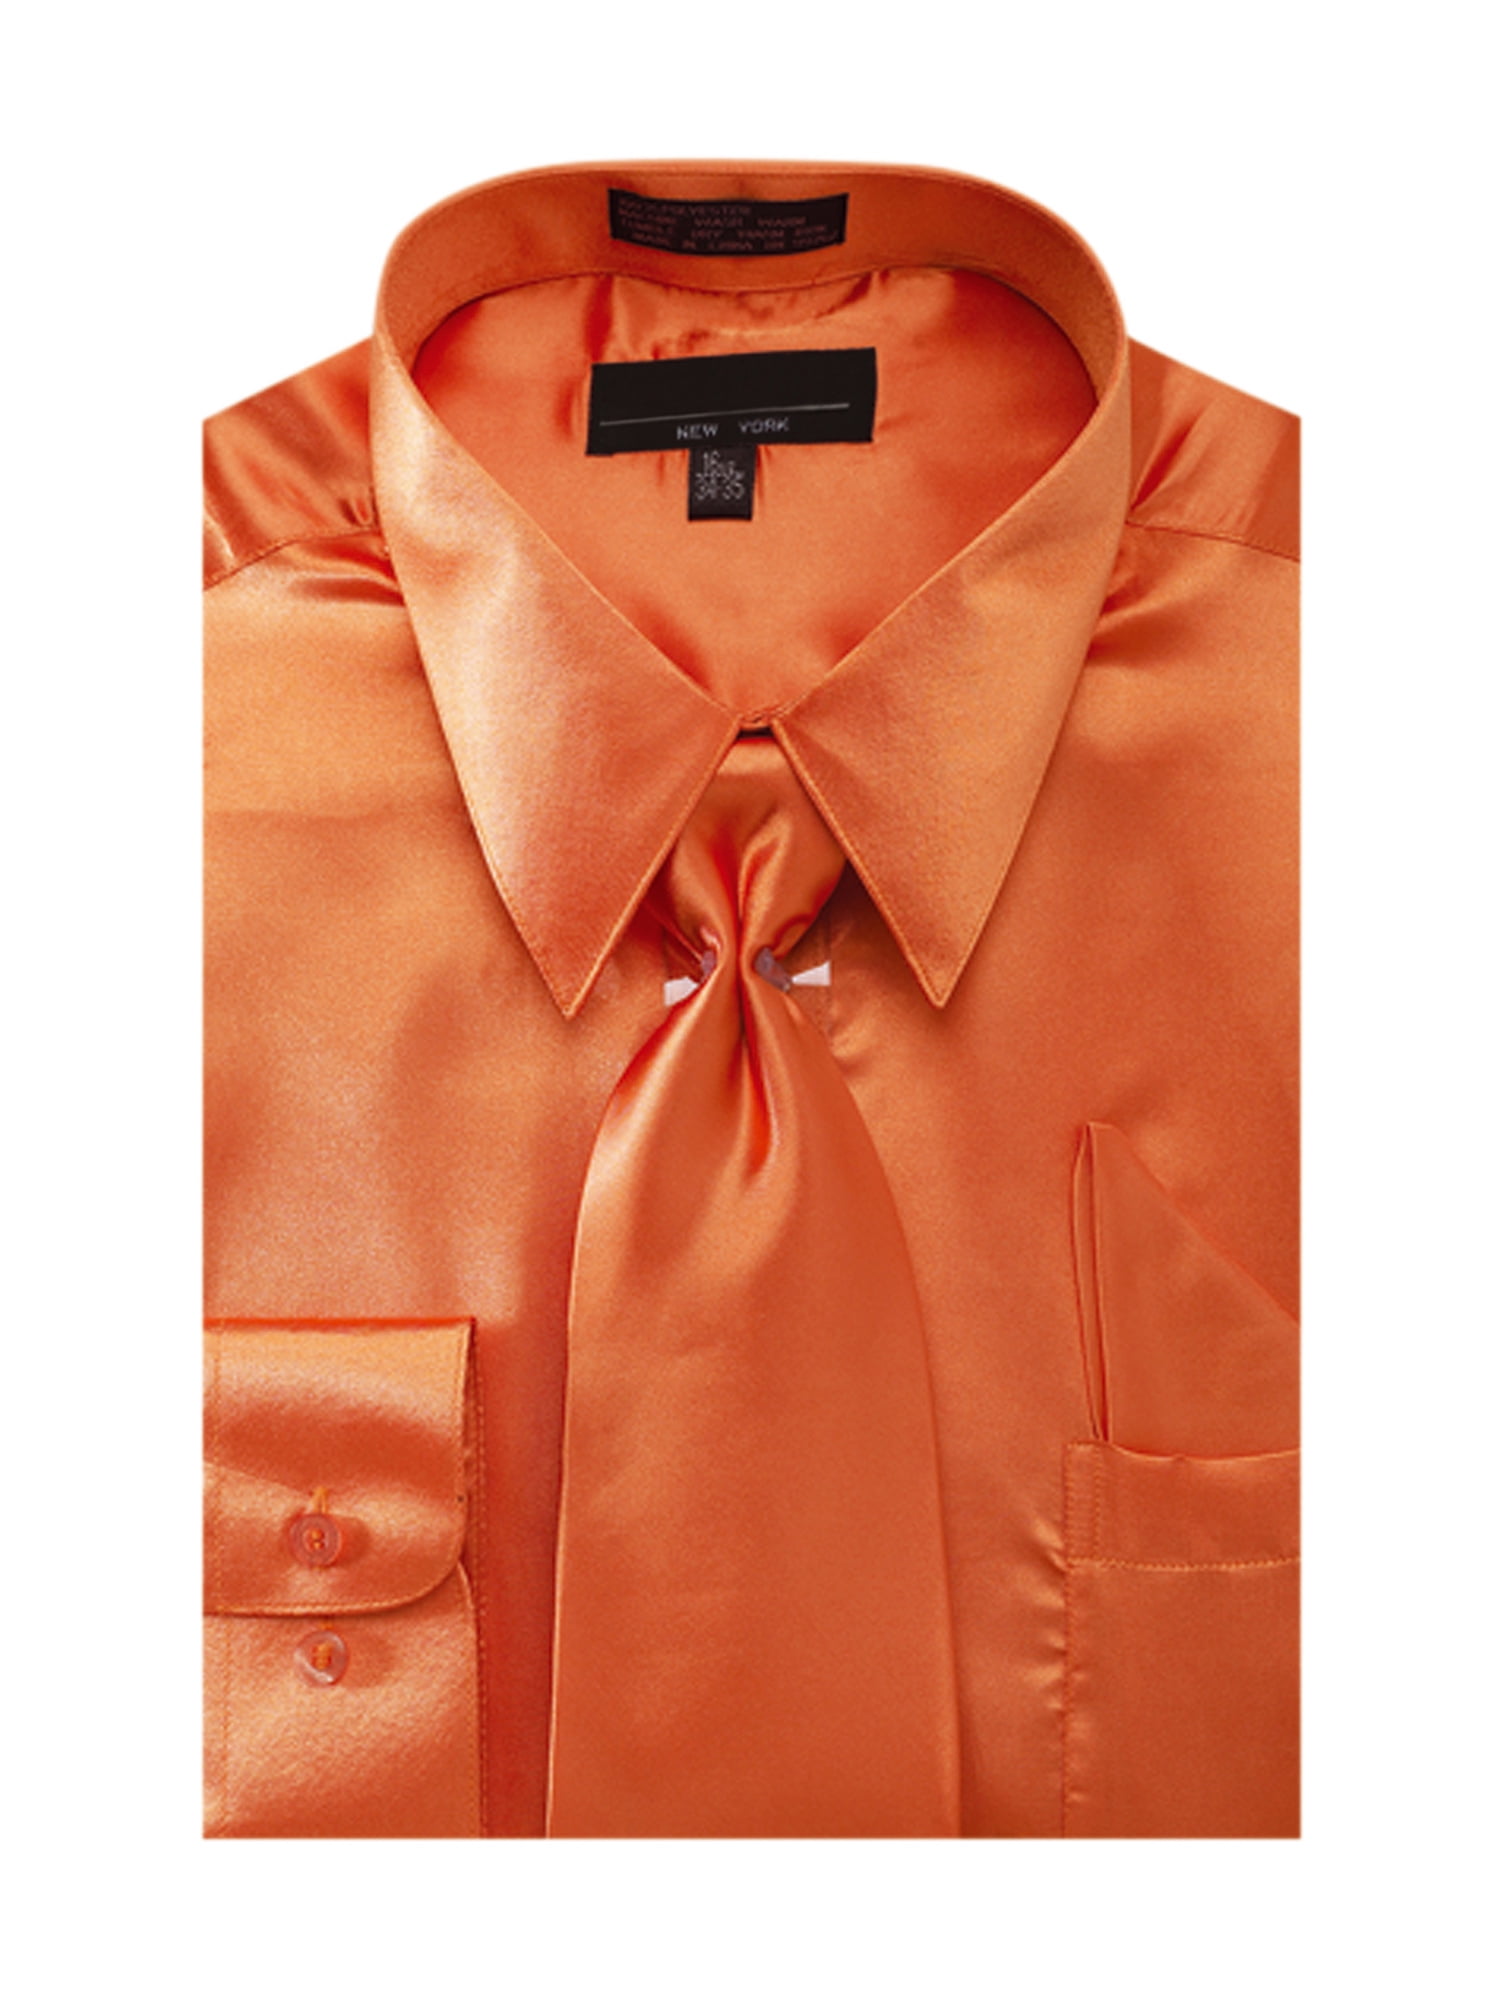 mostarda fantoccio studio orange shirt and tie sets porta Faringe pranzo